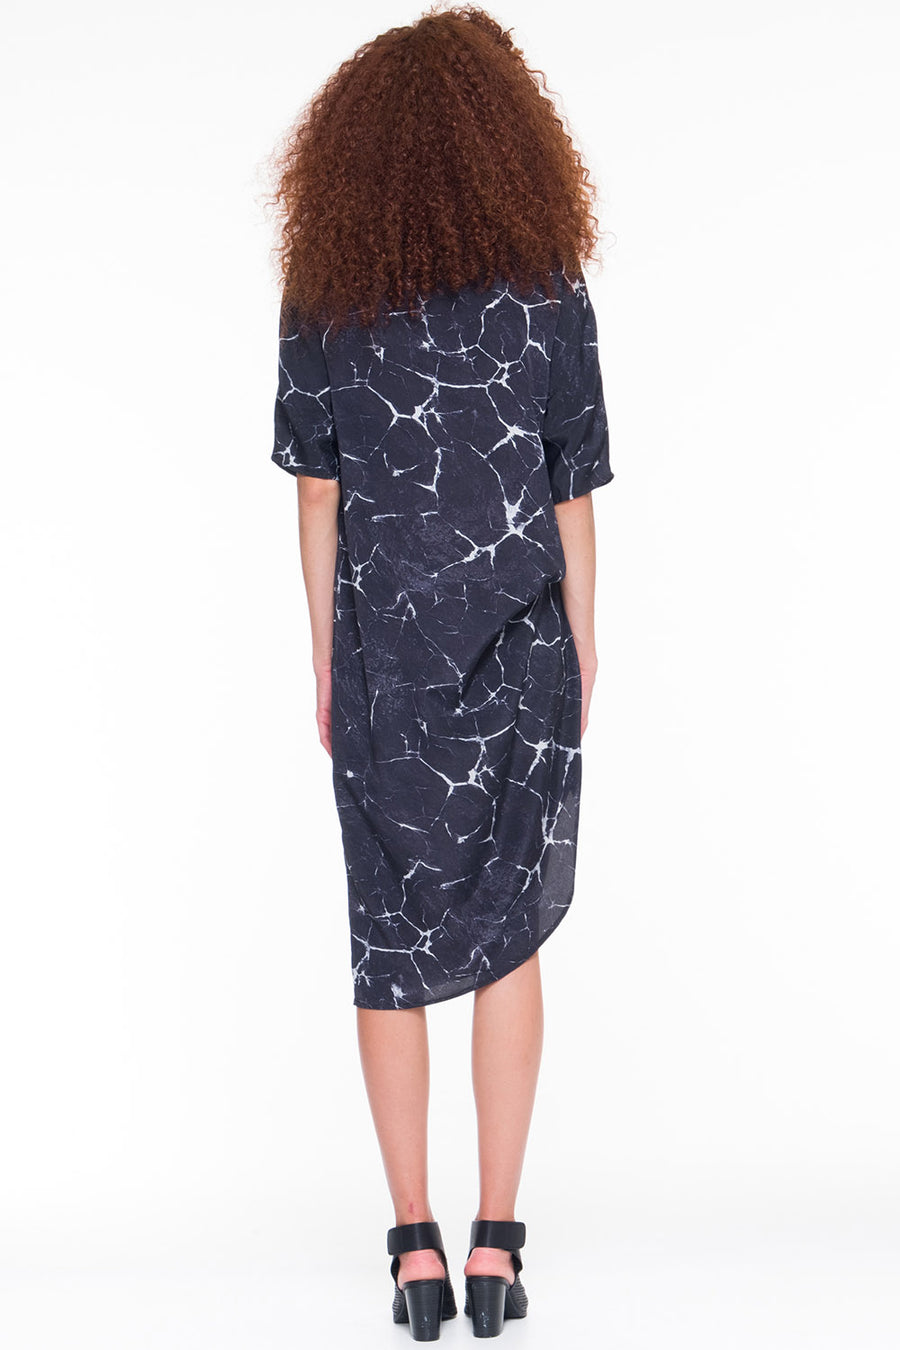 Sample | Odessa Dress Charcoal Print | XS